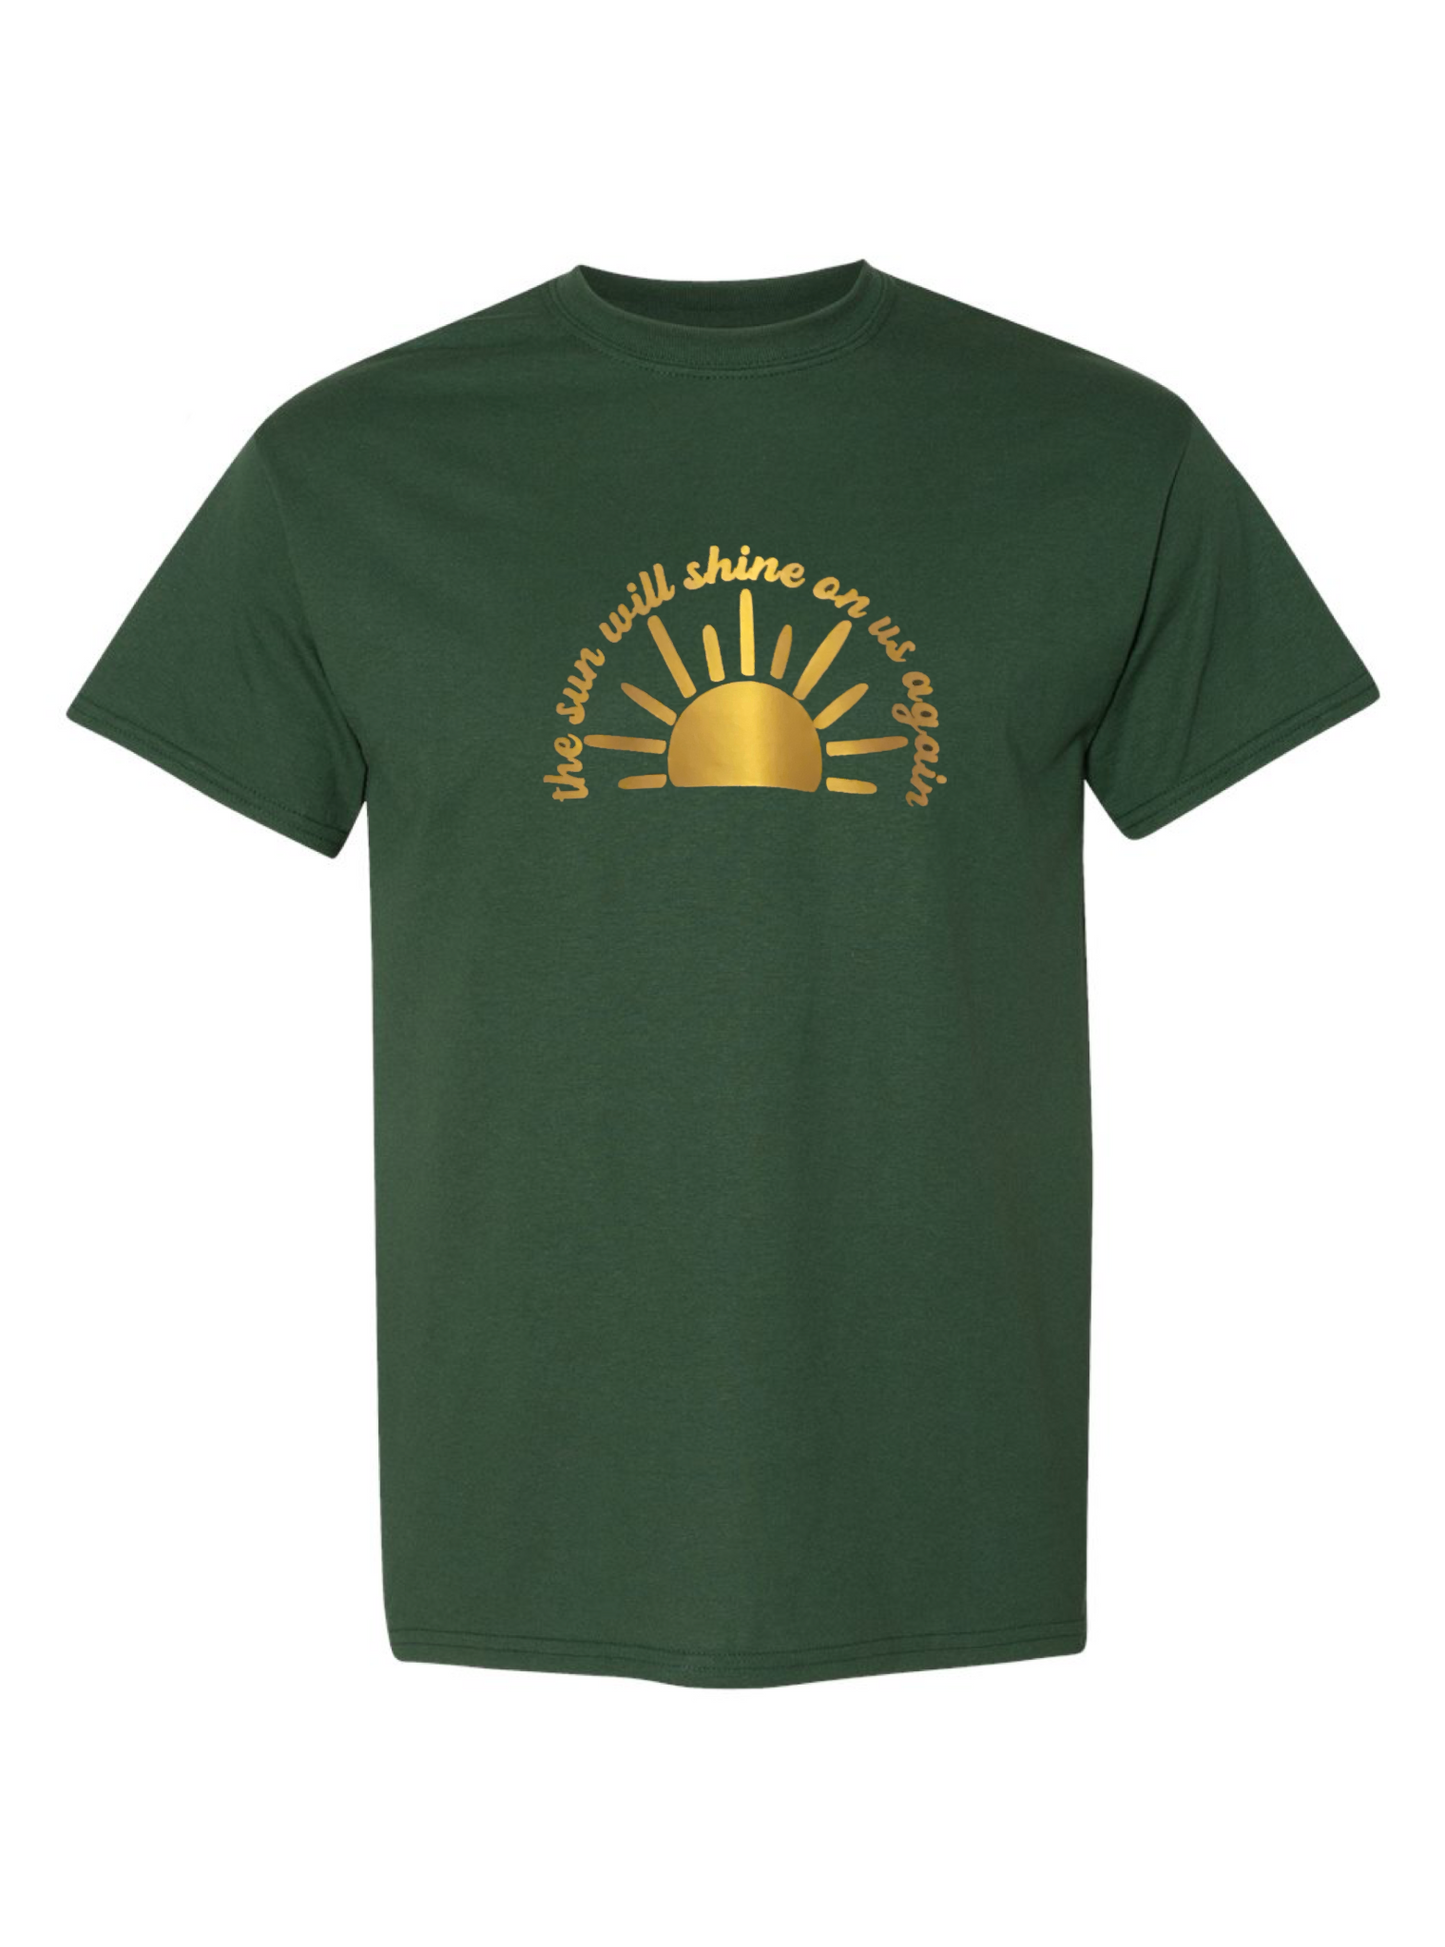 The Sun Will Shine on Us Again t-shirt